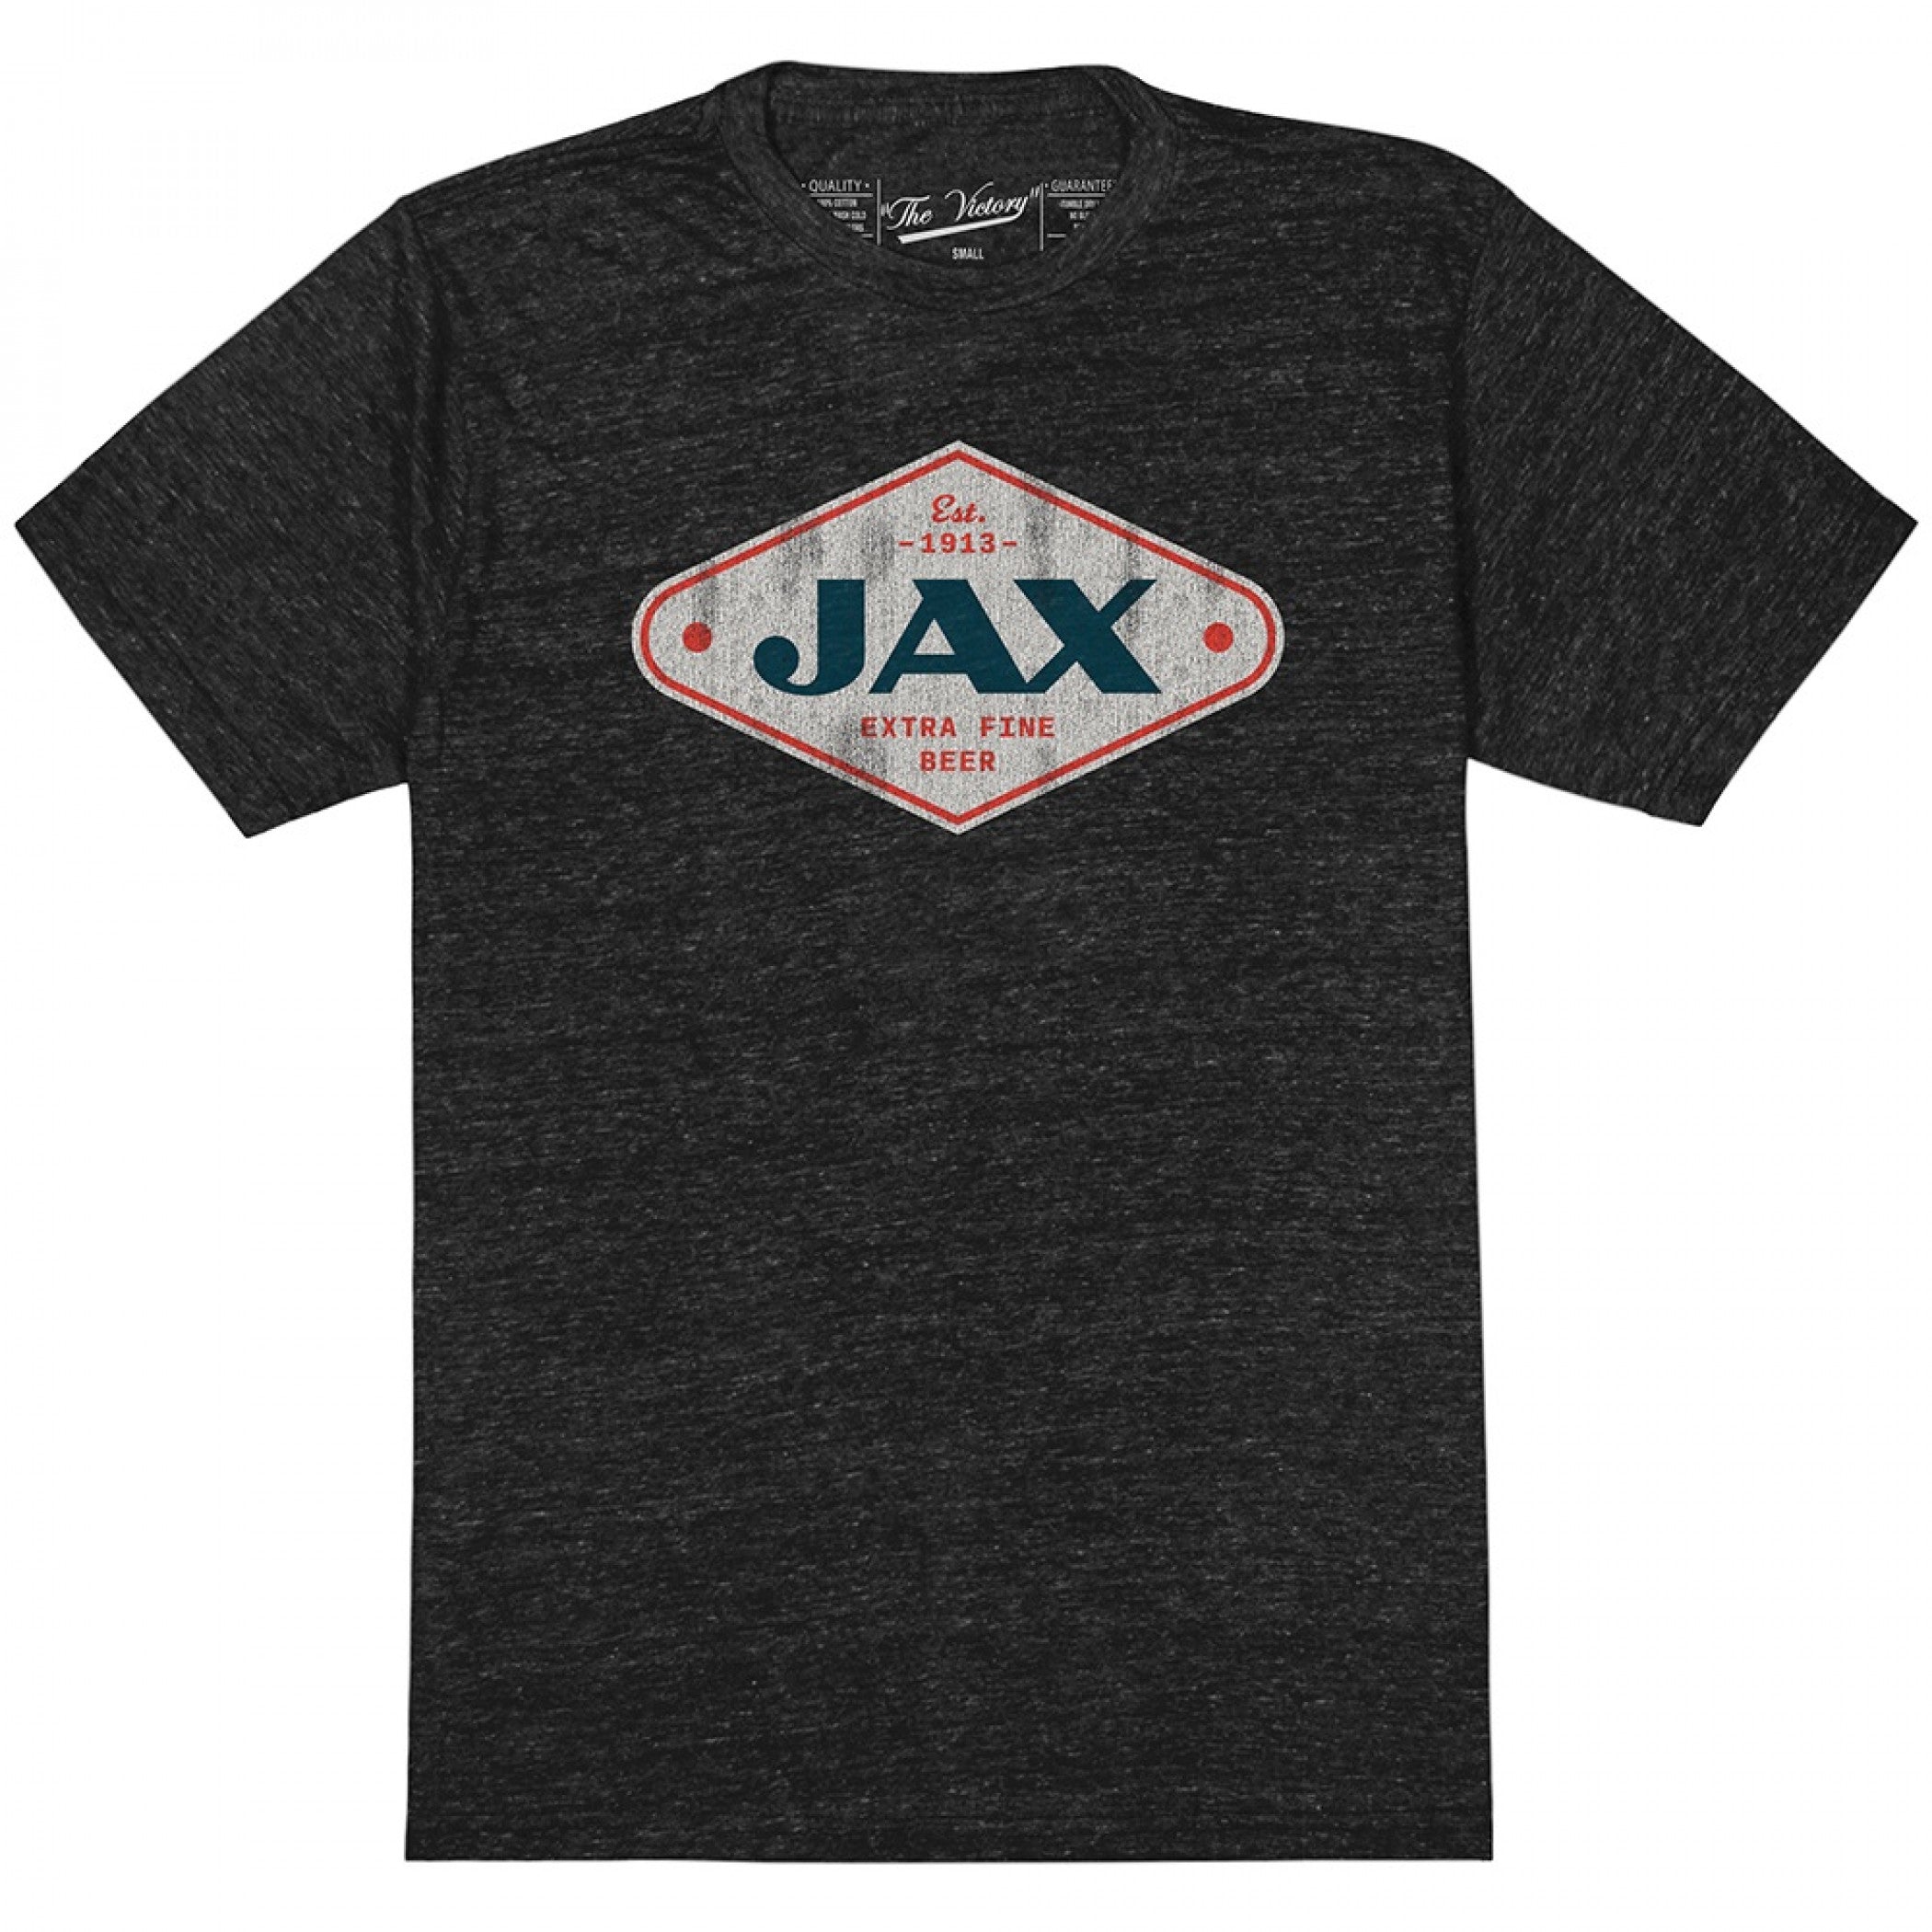 title:Jax Beer Logo Retro Style T-Shirt;color:Black